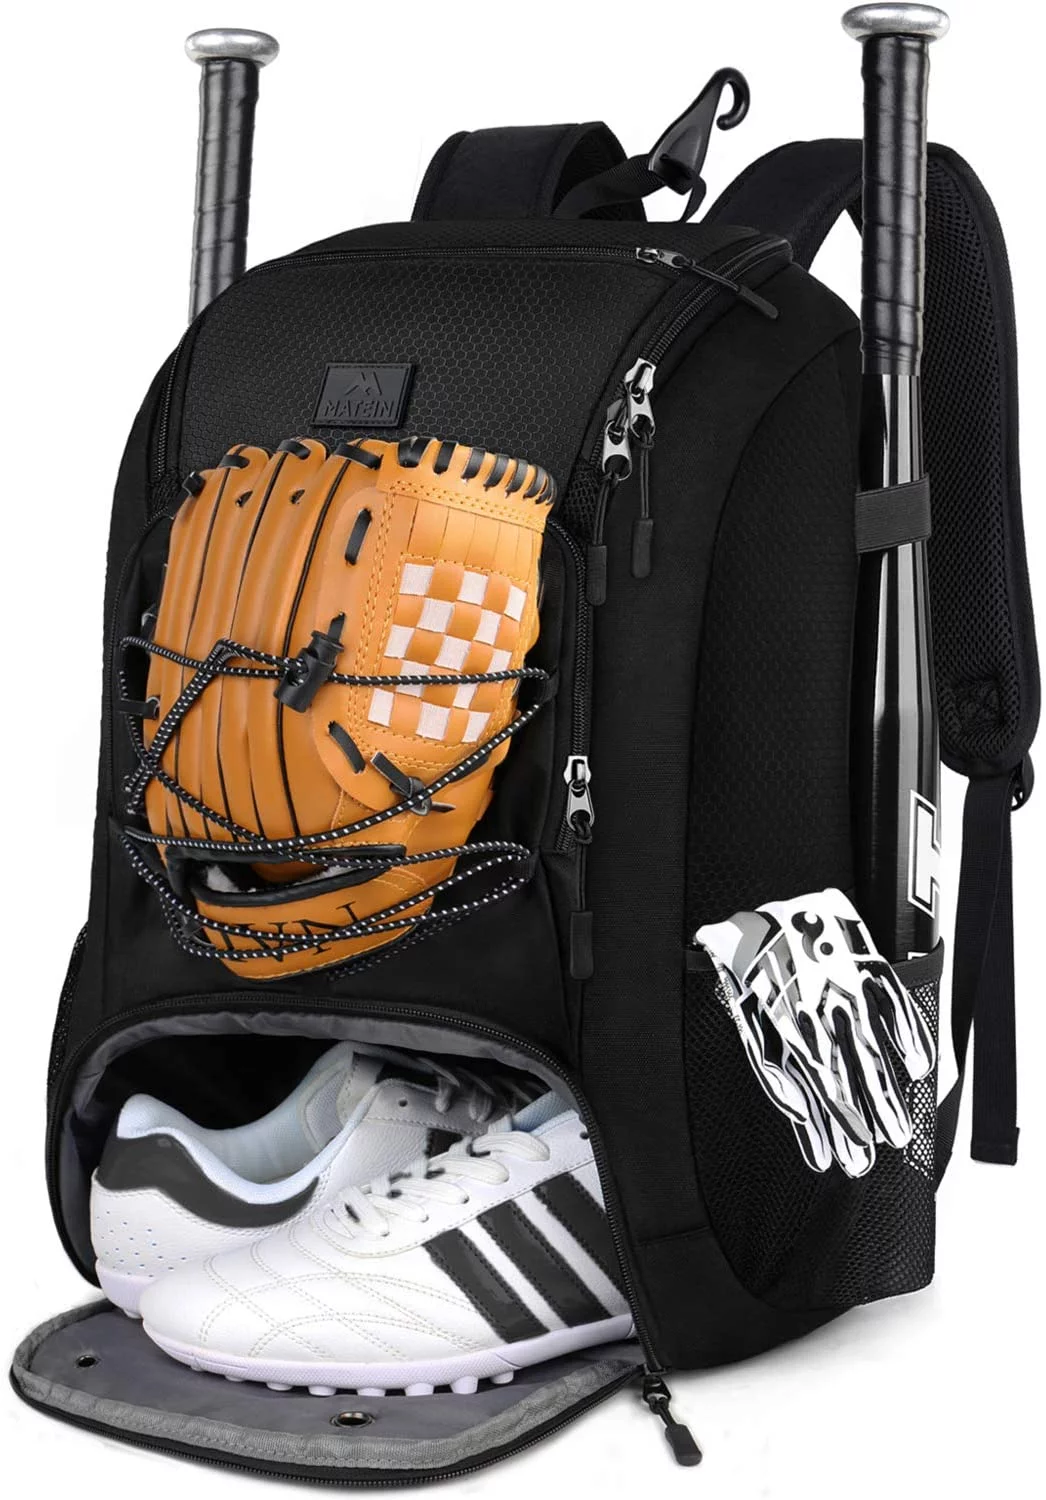 Hibbett Sports Backpacks: Functional and Stylish Gear缩略图